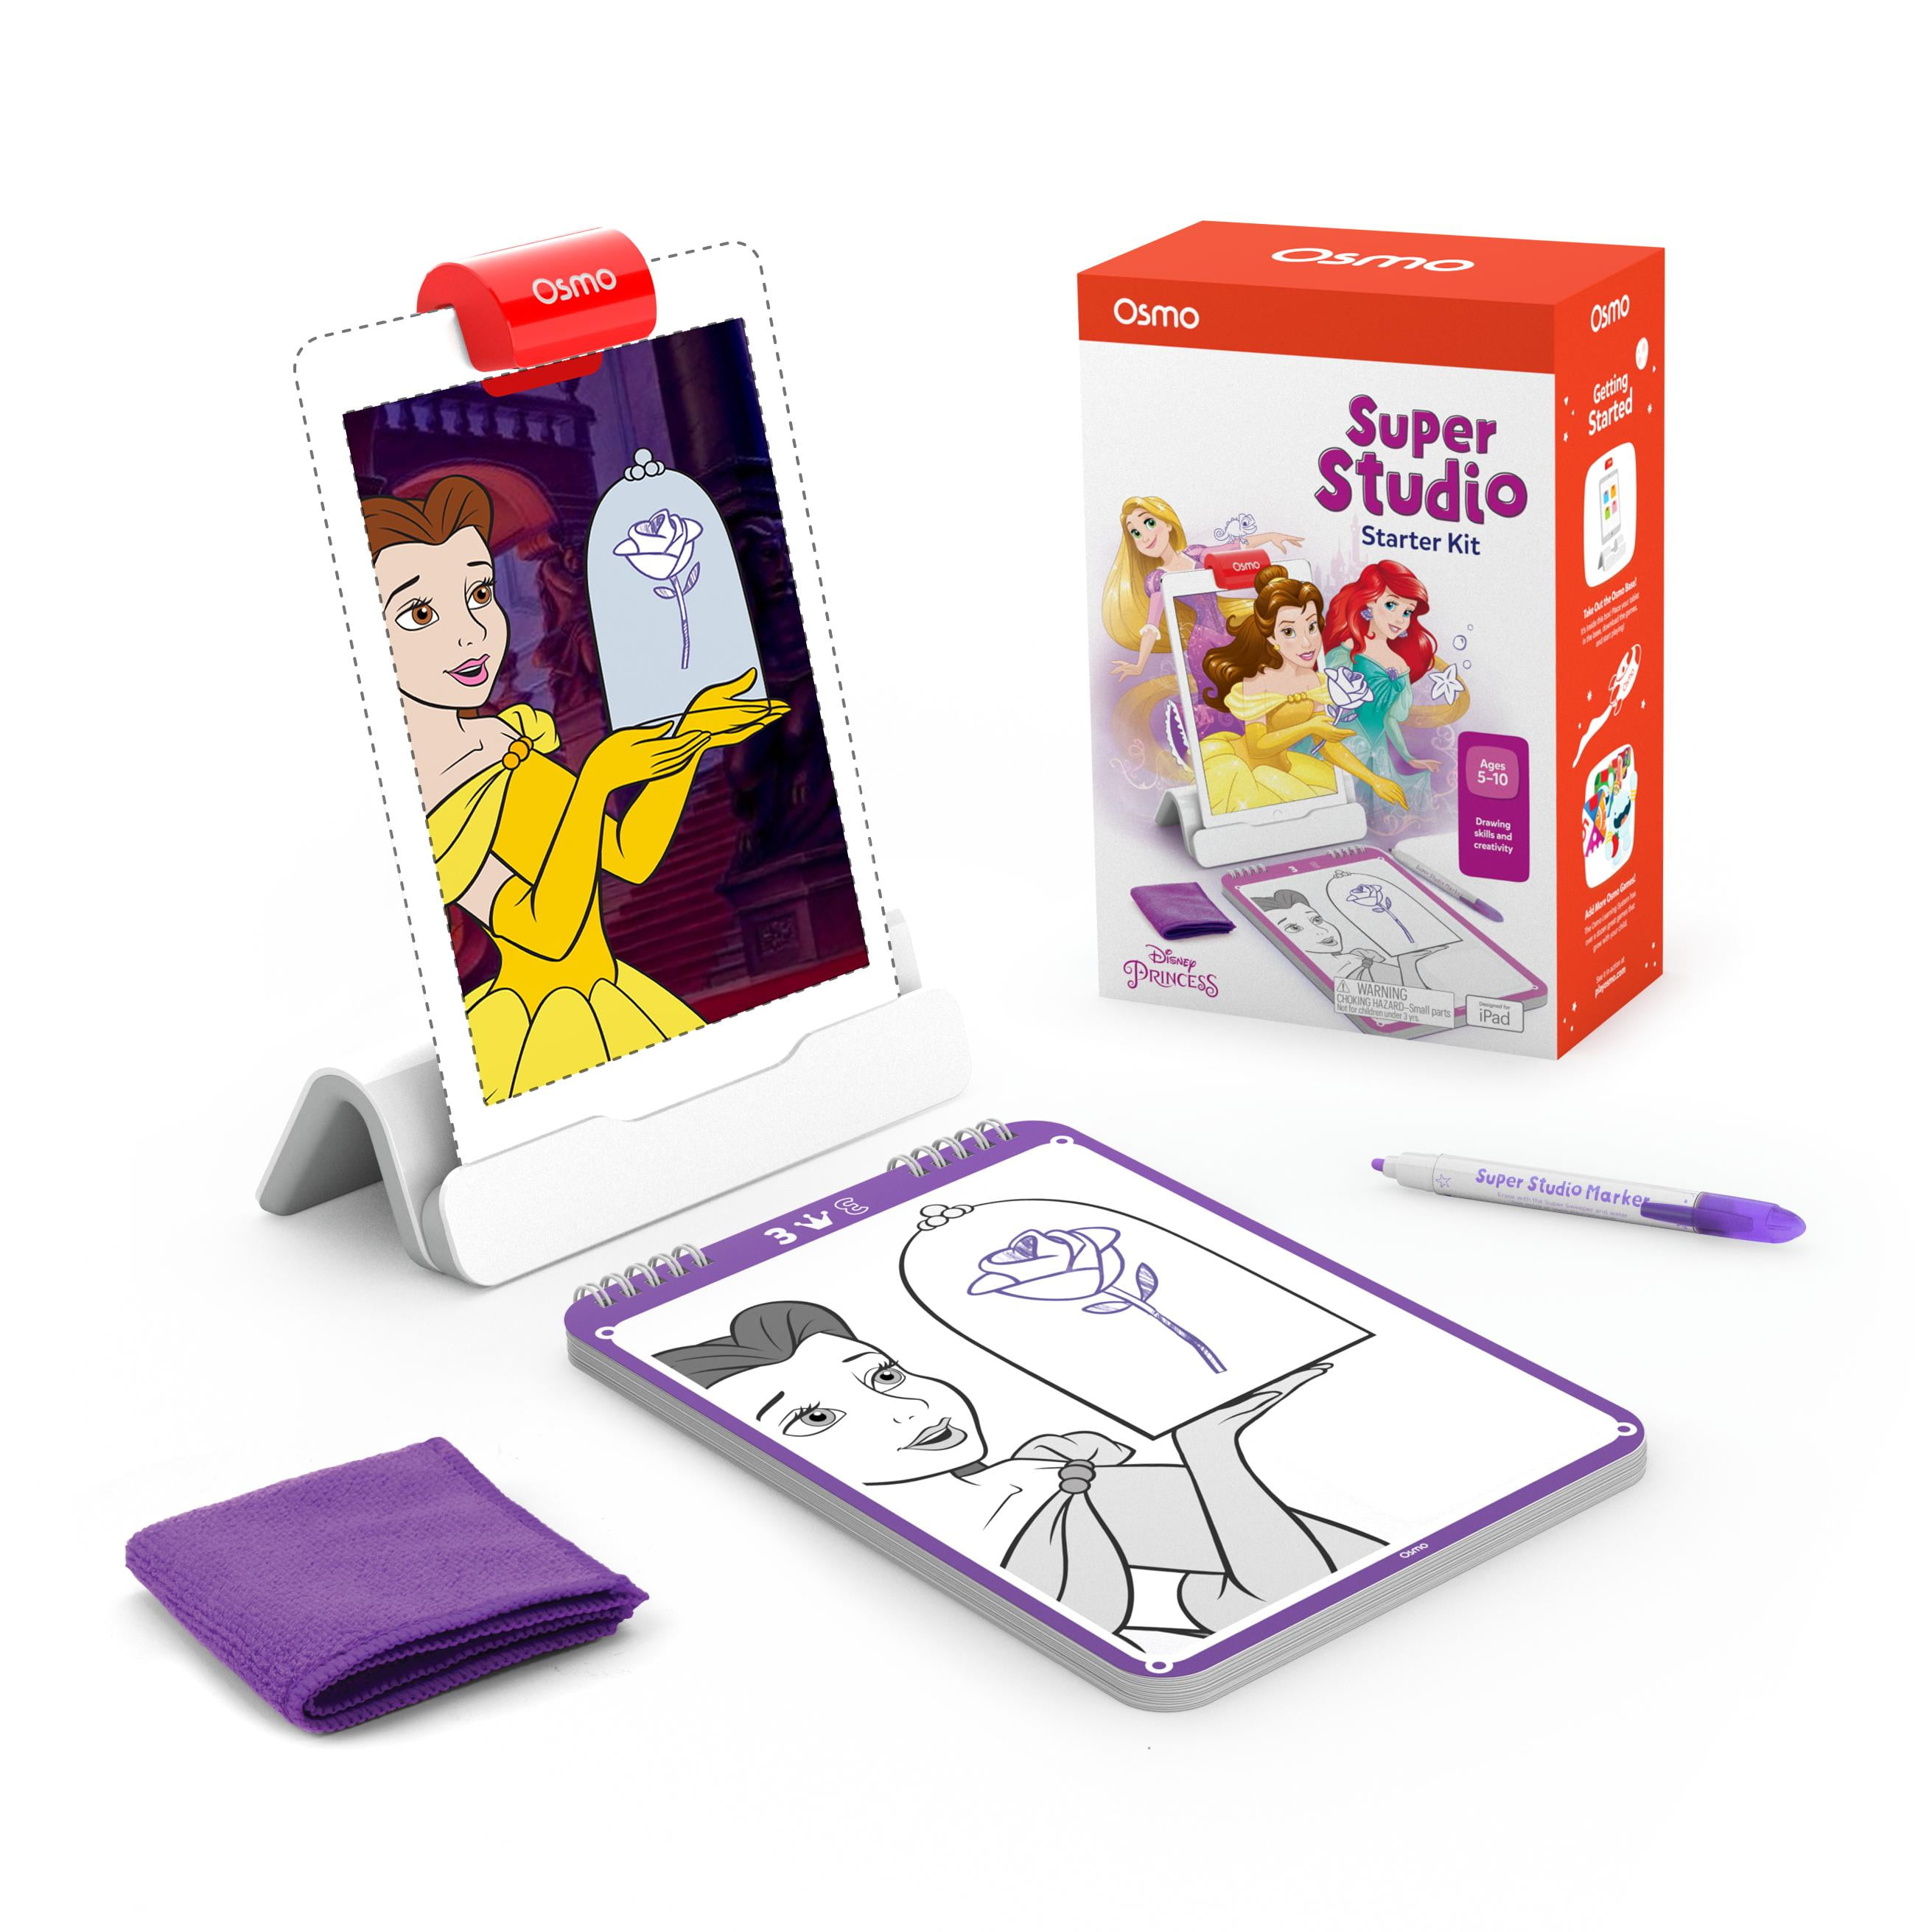 Osmo - Little Genius Starter Kit for iPad - 4 Hands-On Learning 